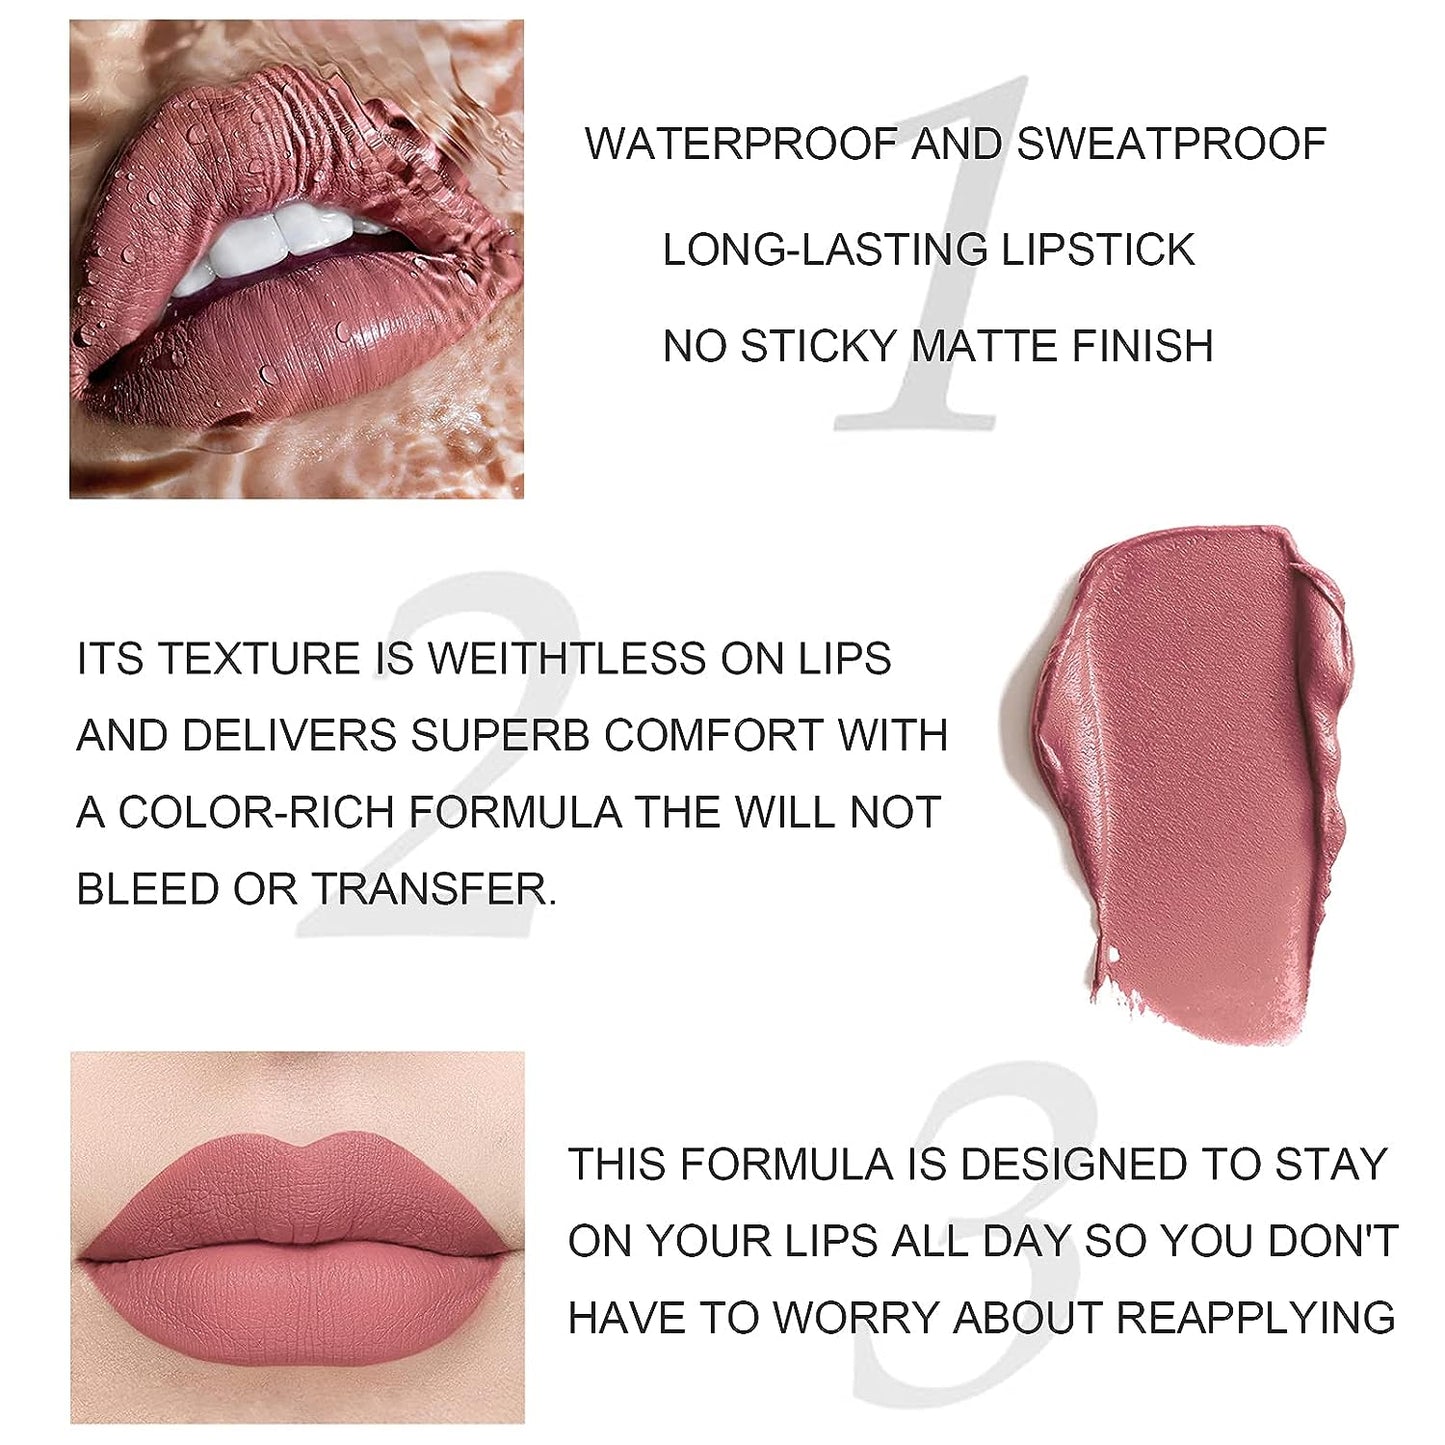 LipAllure - De ultieme collectie matte lipsticks